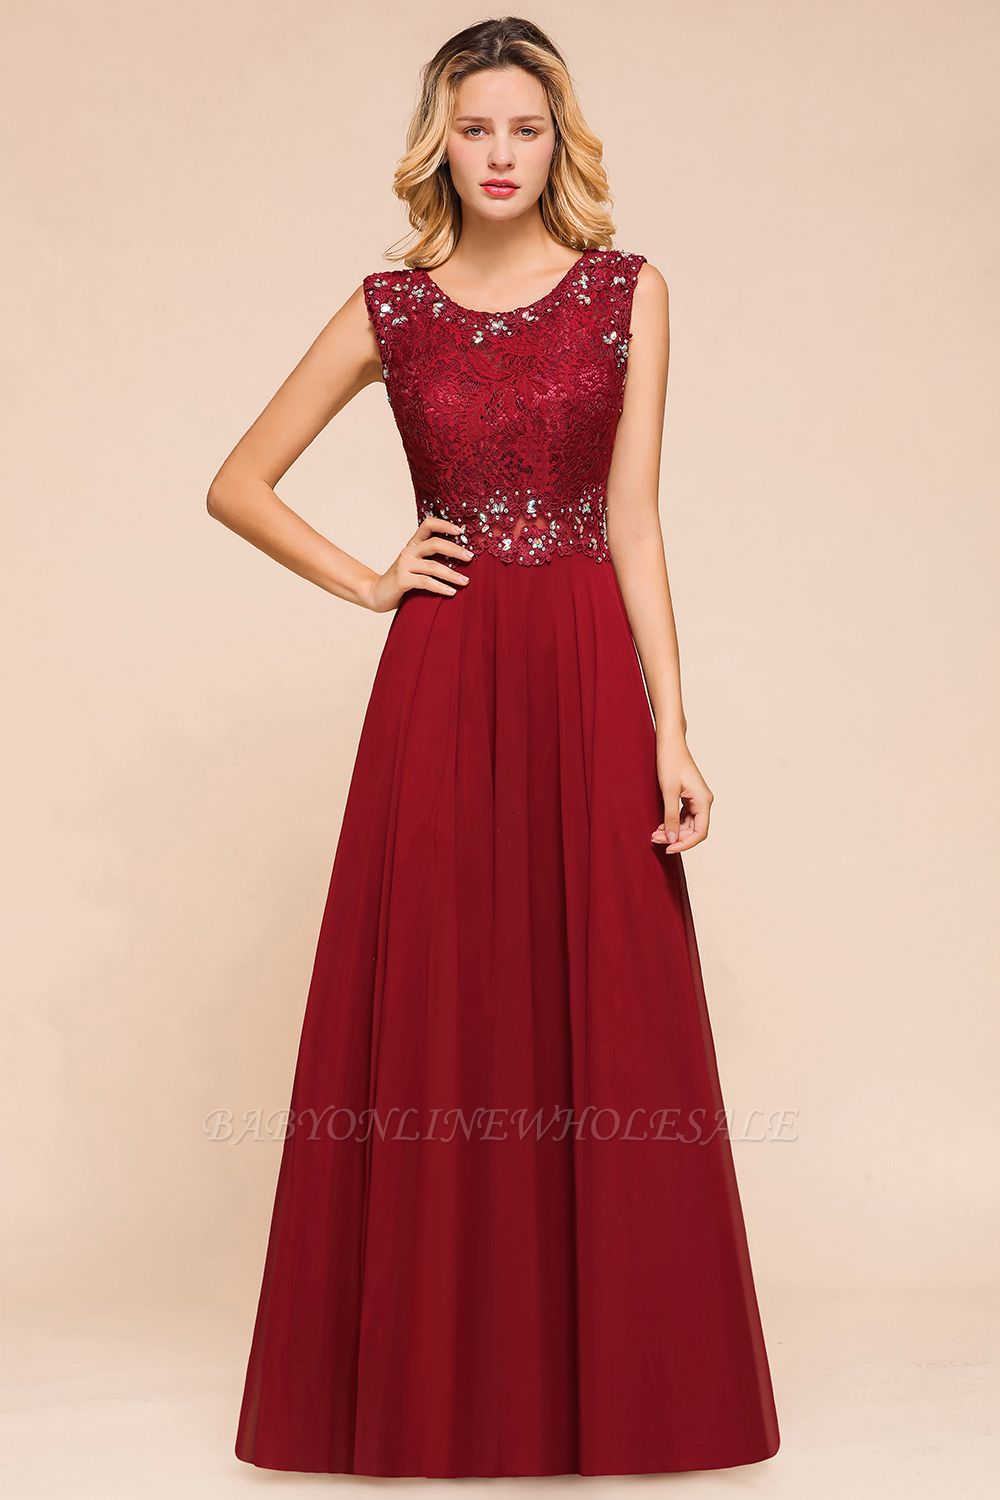 Arla | Trendy Round neck Beaded Burgundy Lace Bridesmaid Dress with Belt